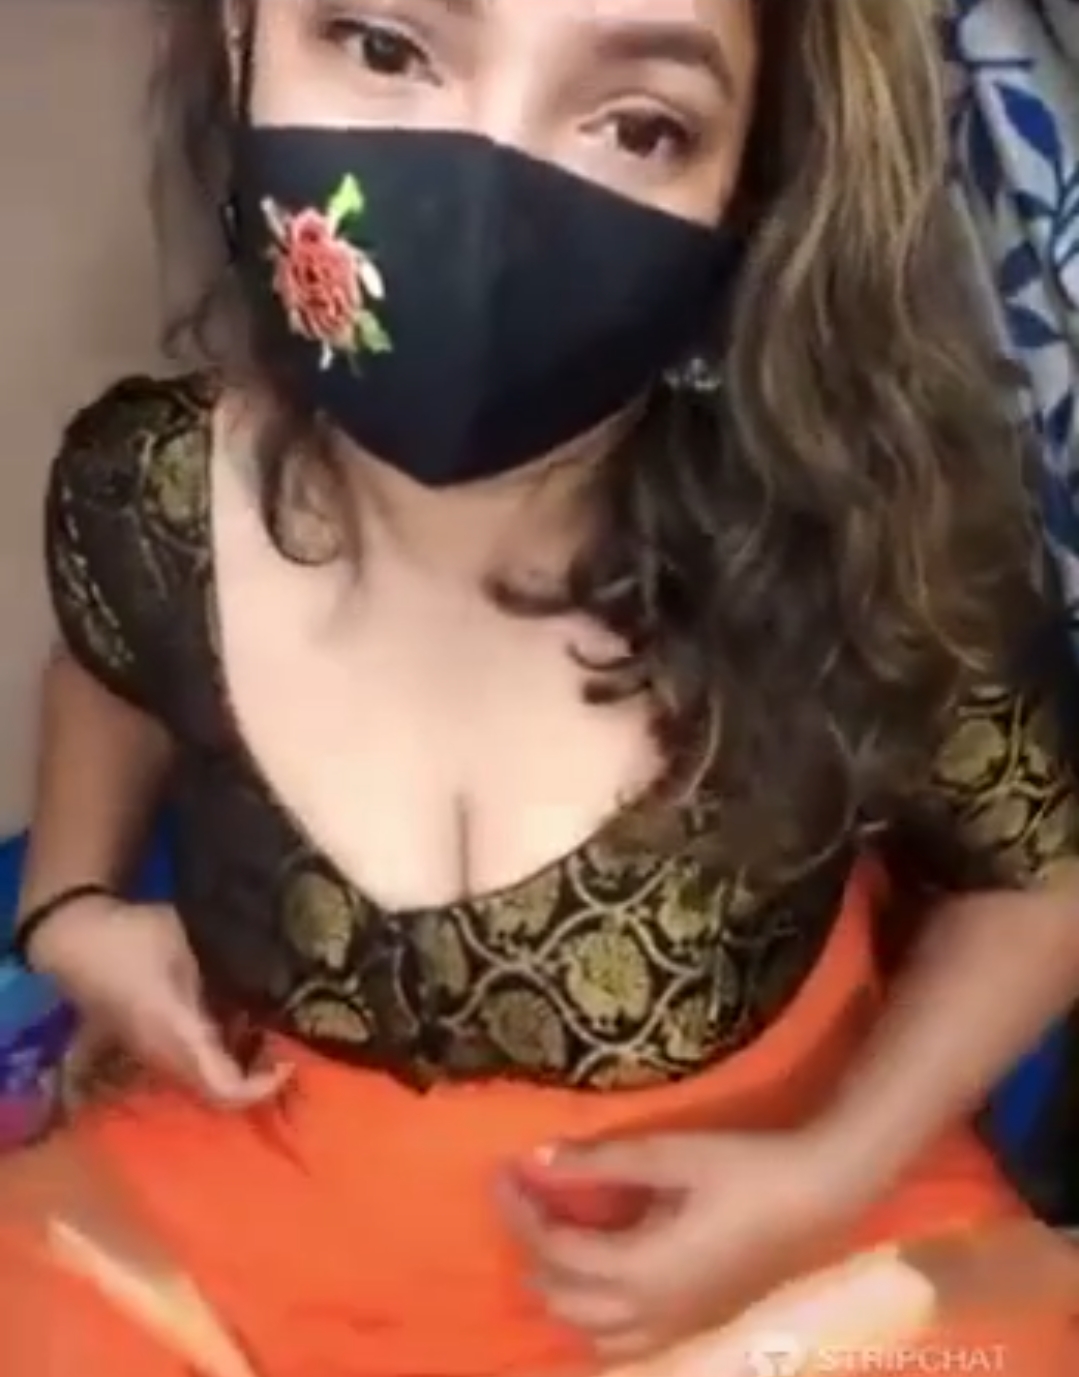 Snapchat girl on mask